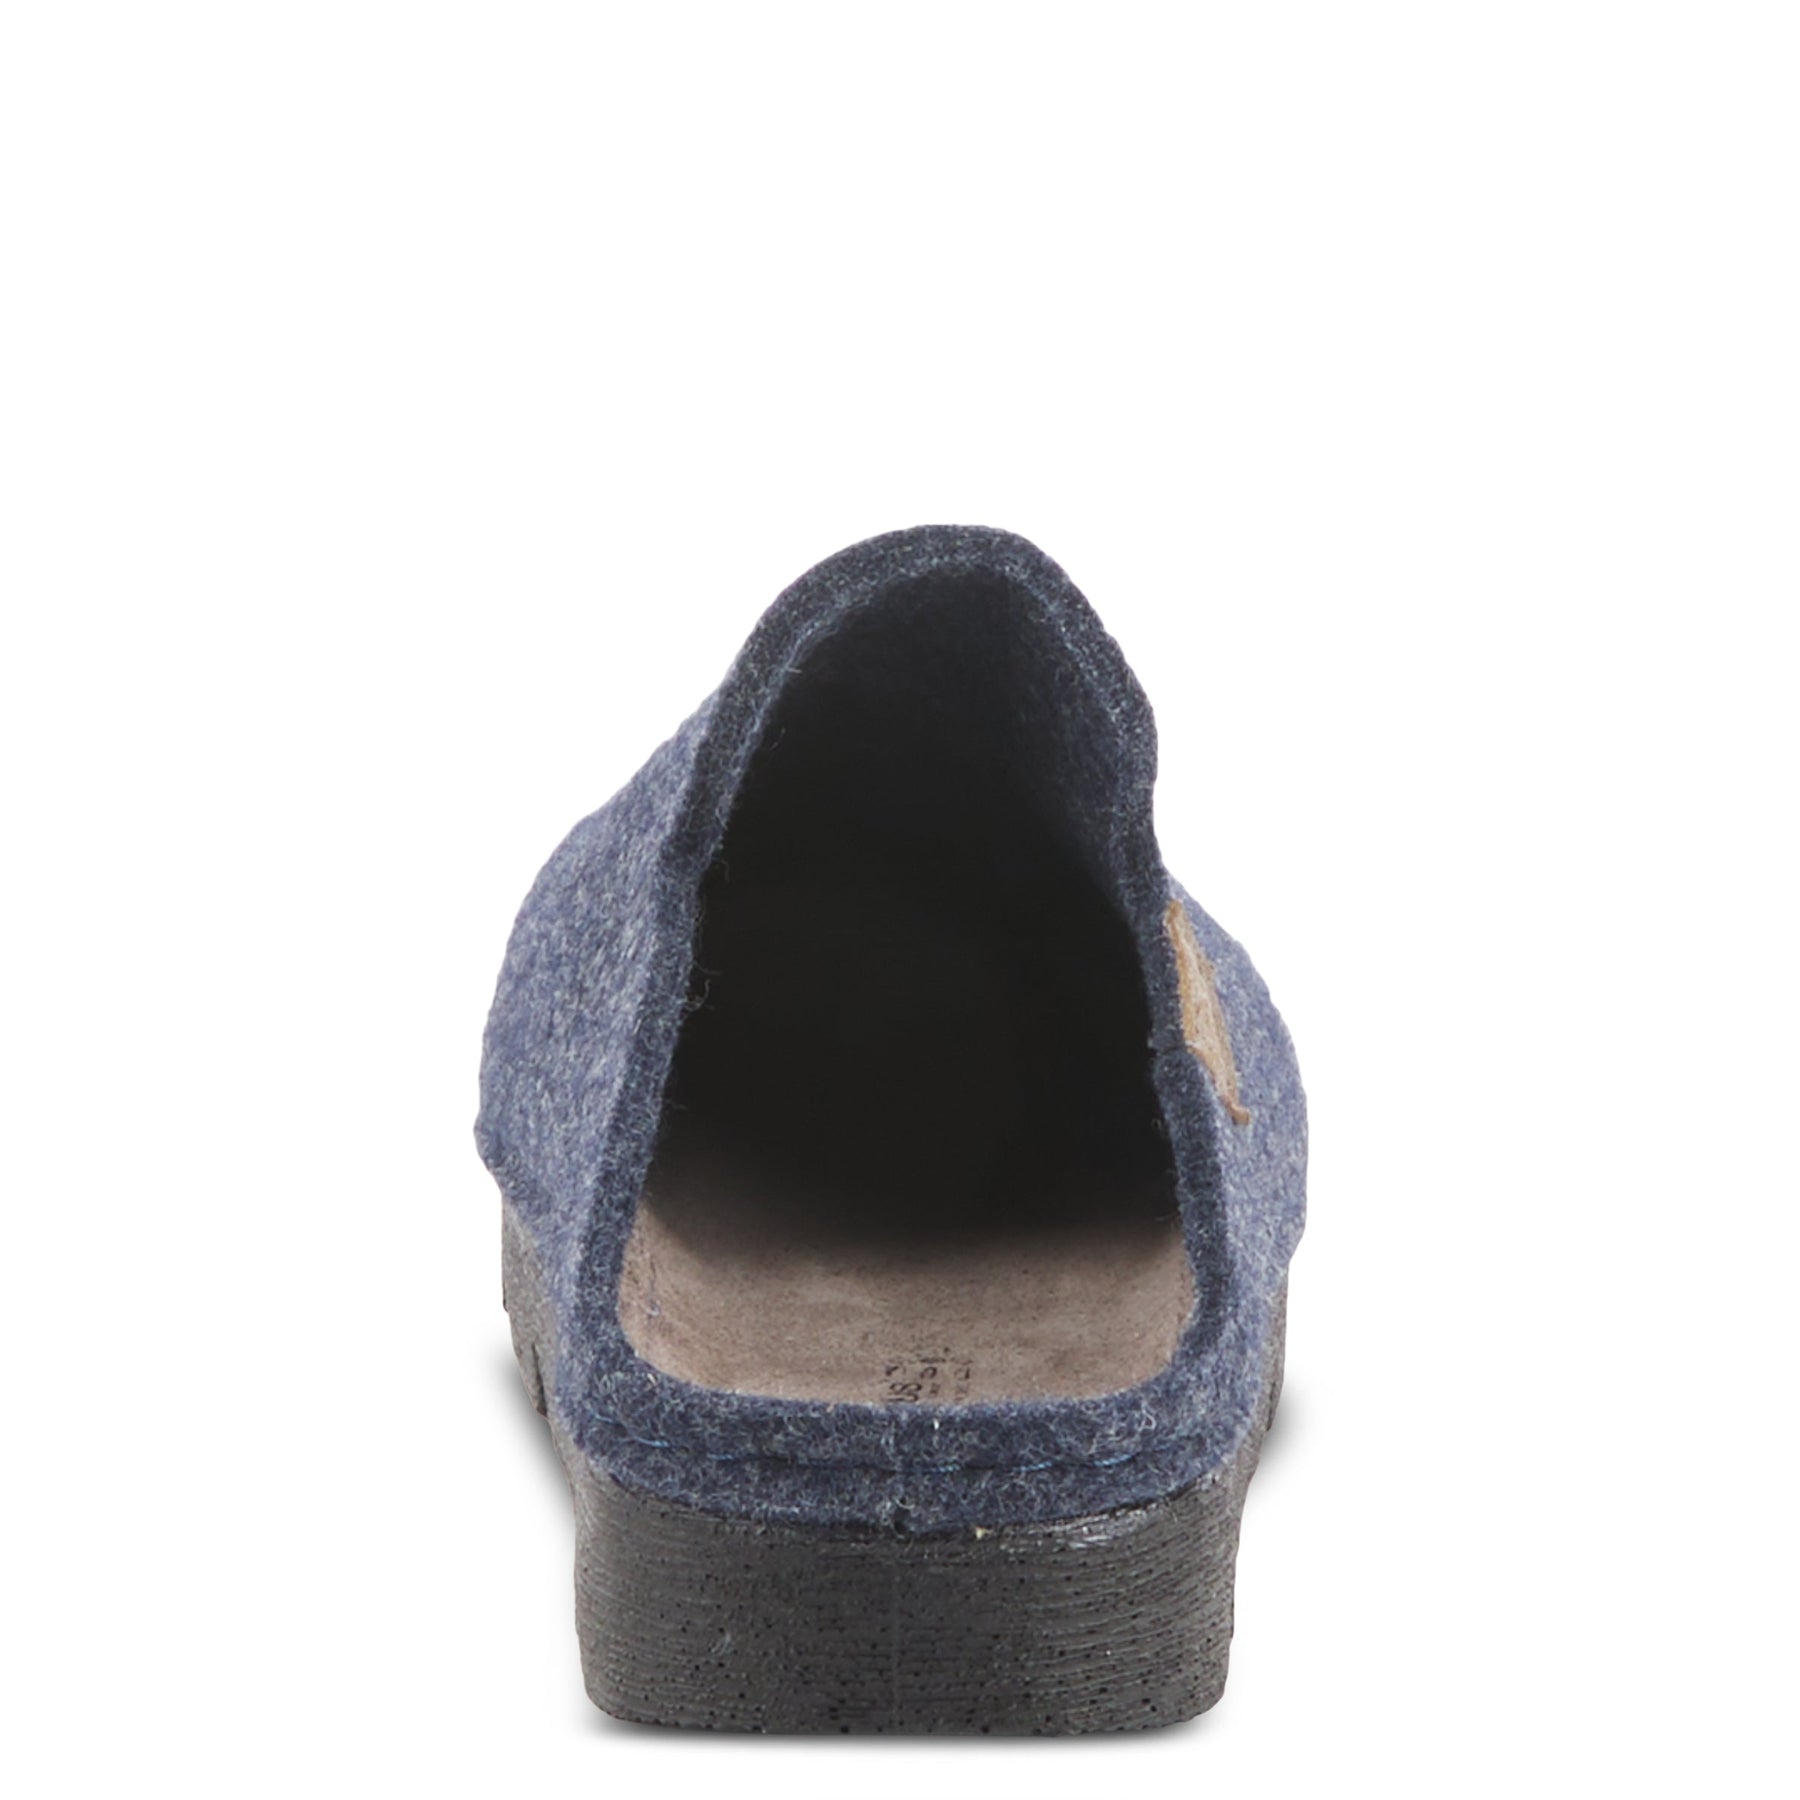 CLOGGISH PLATFORM CLOG by FLEXUS – Spring Step Shoes